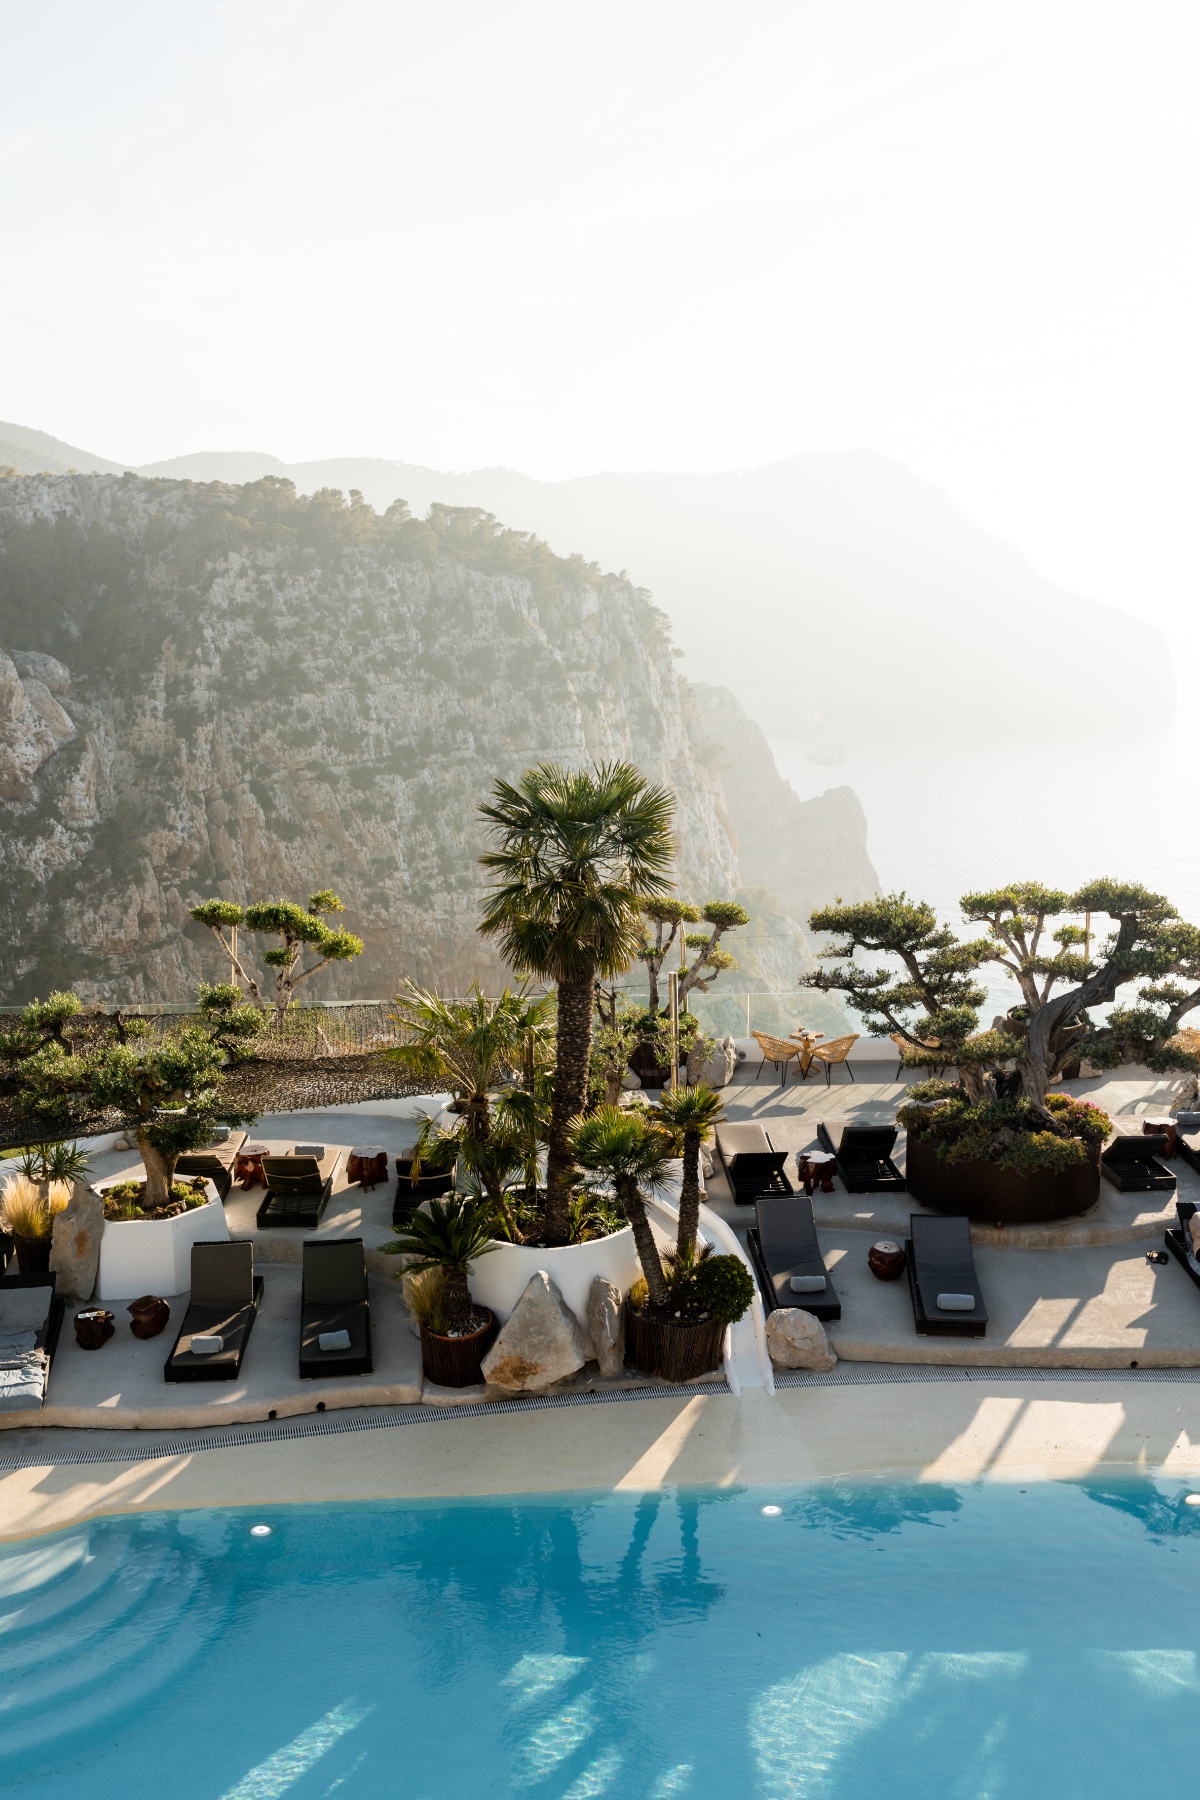 Dreamy tropical cliffside wedding venue in Ibiza Spain 